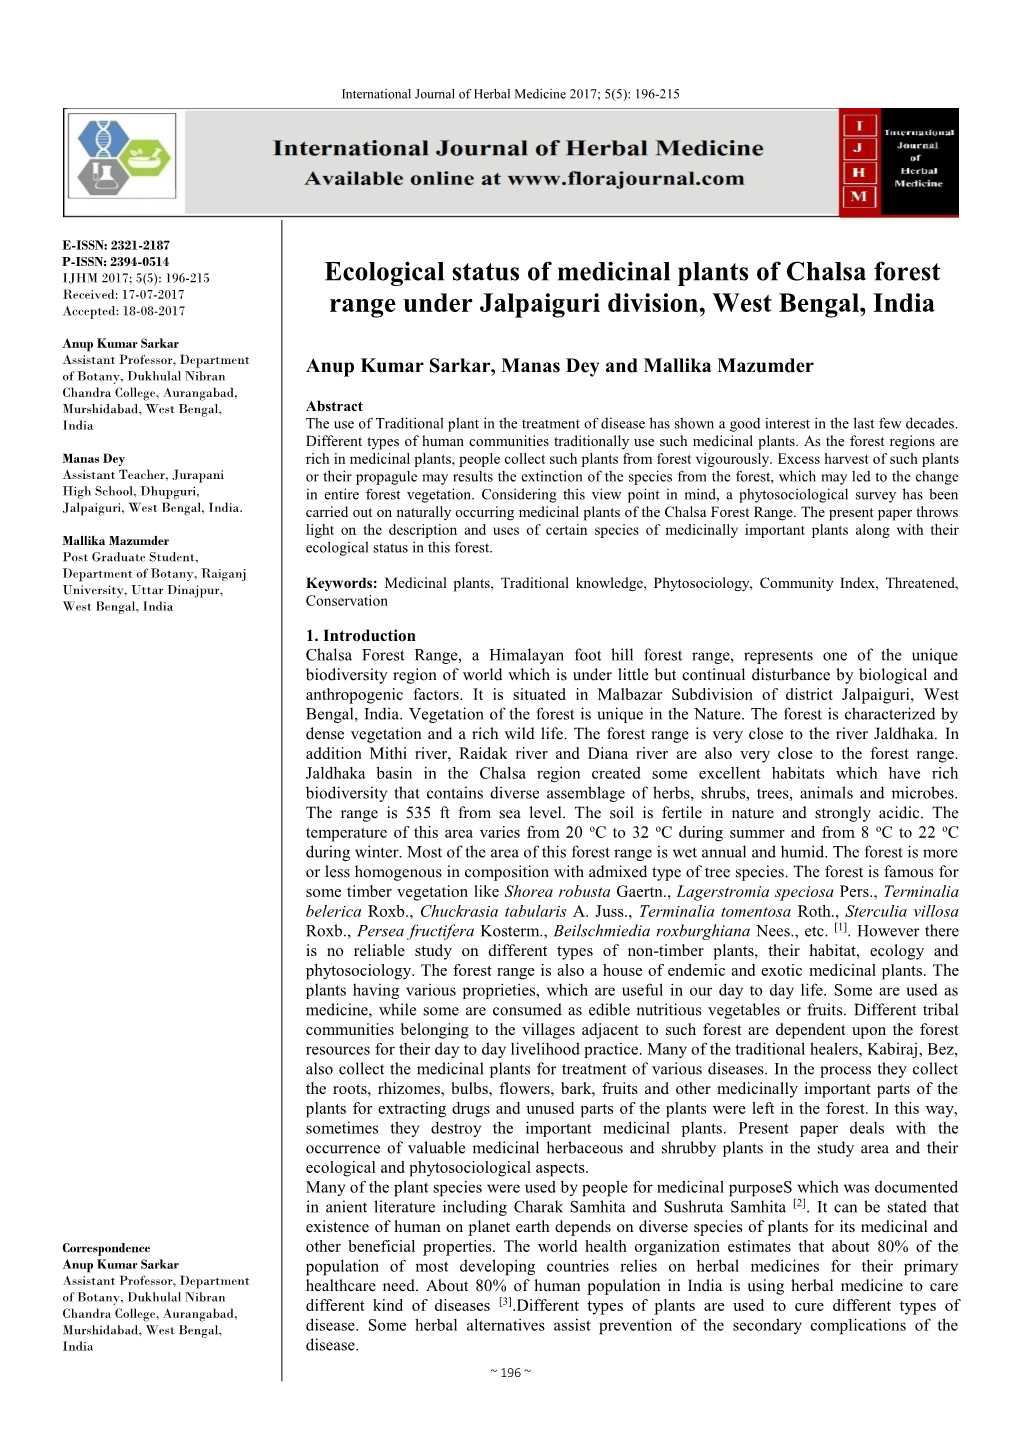 Ecological Status of Medicinal Plants of Chalsa Forest Range Under